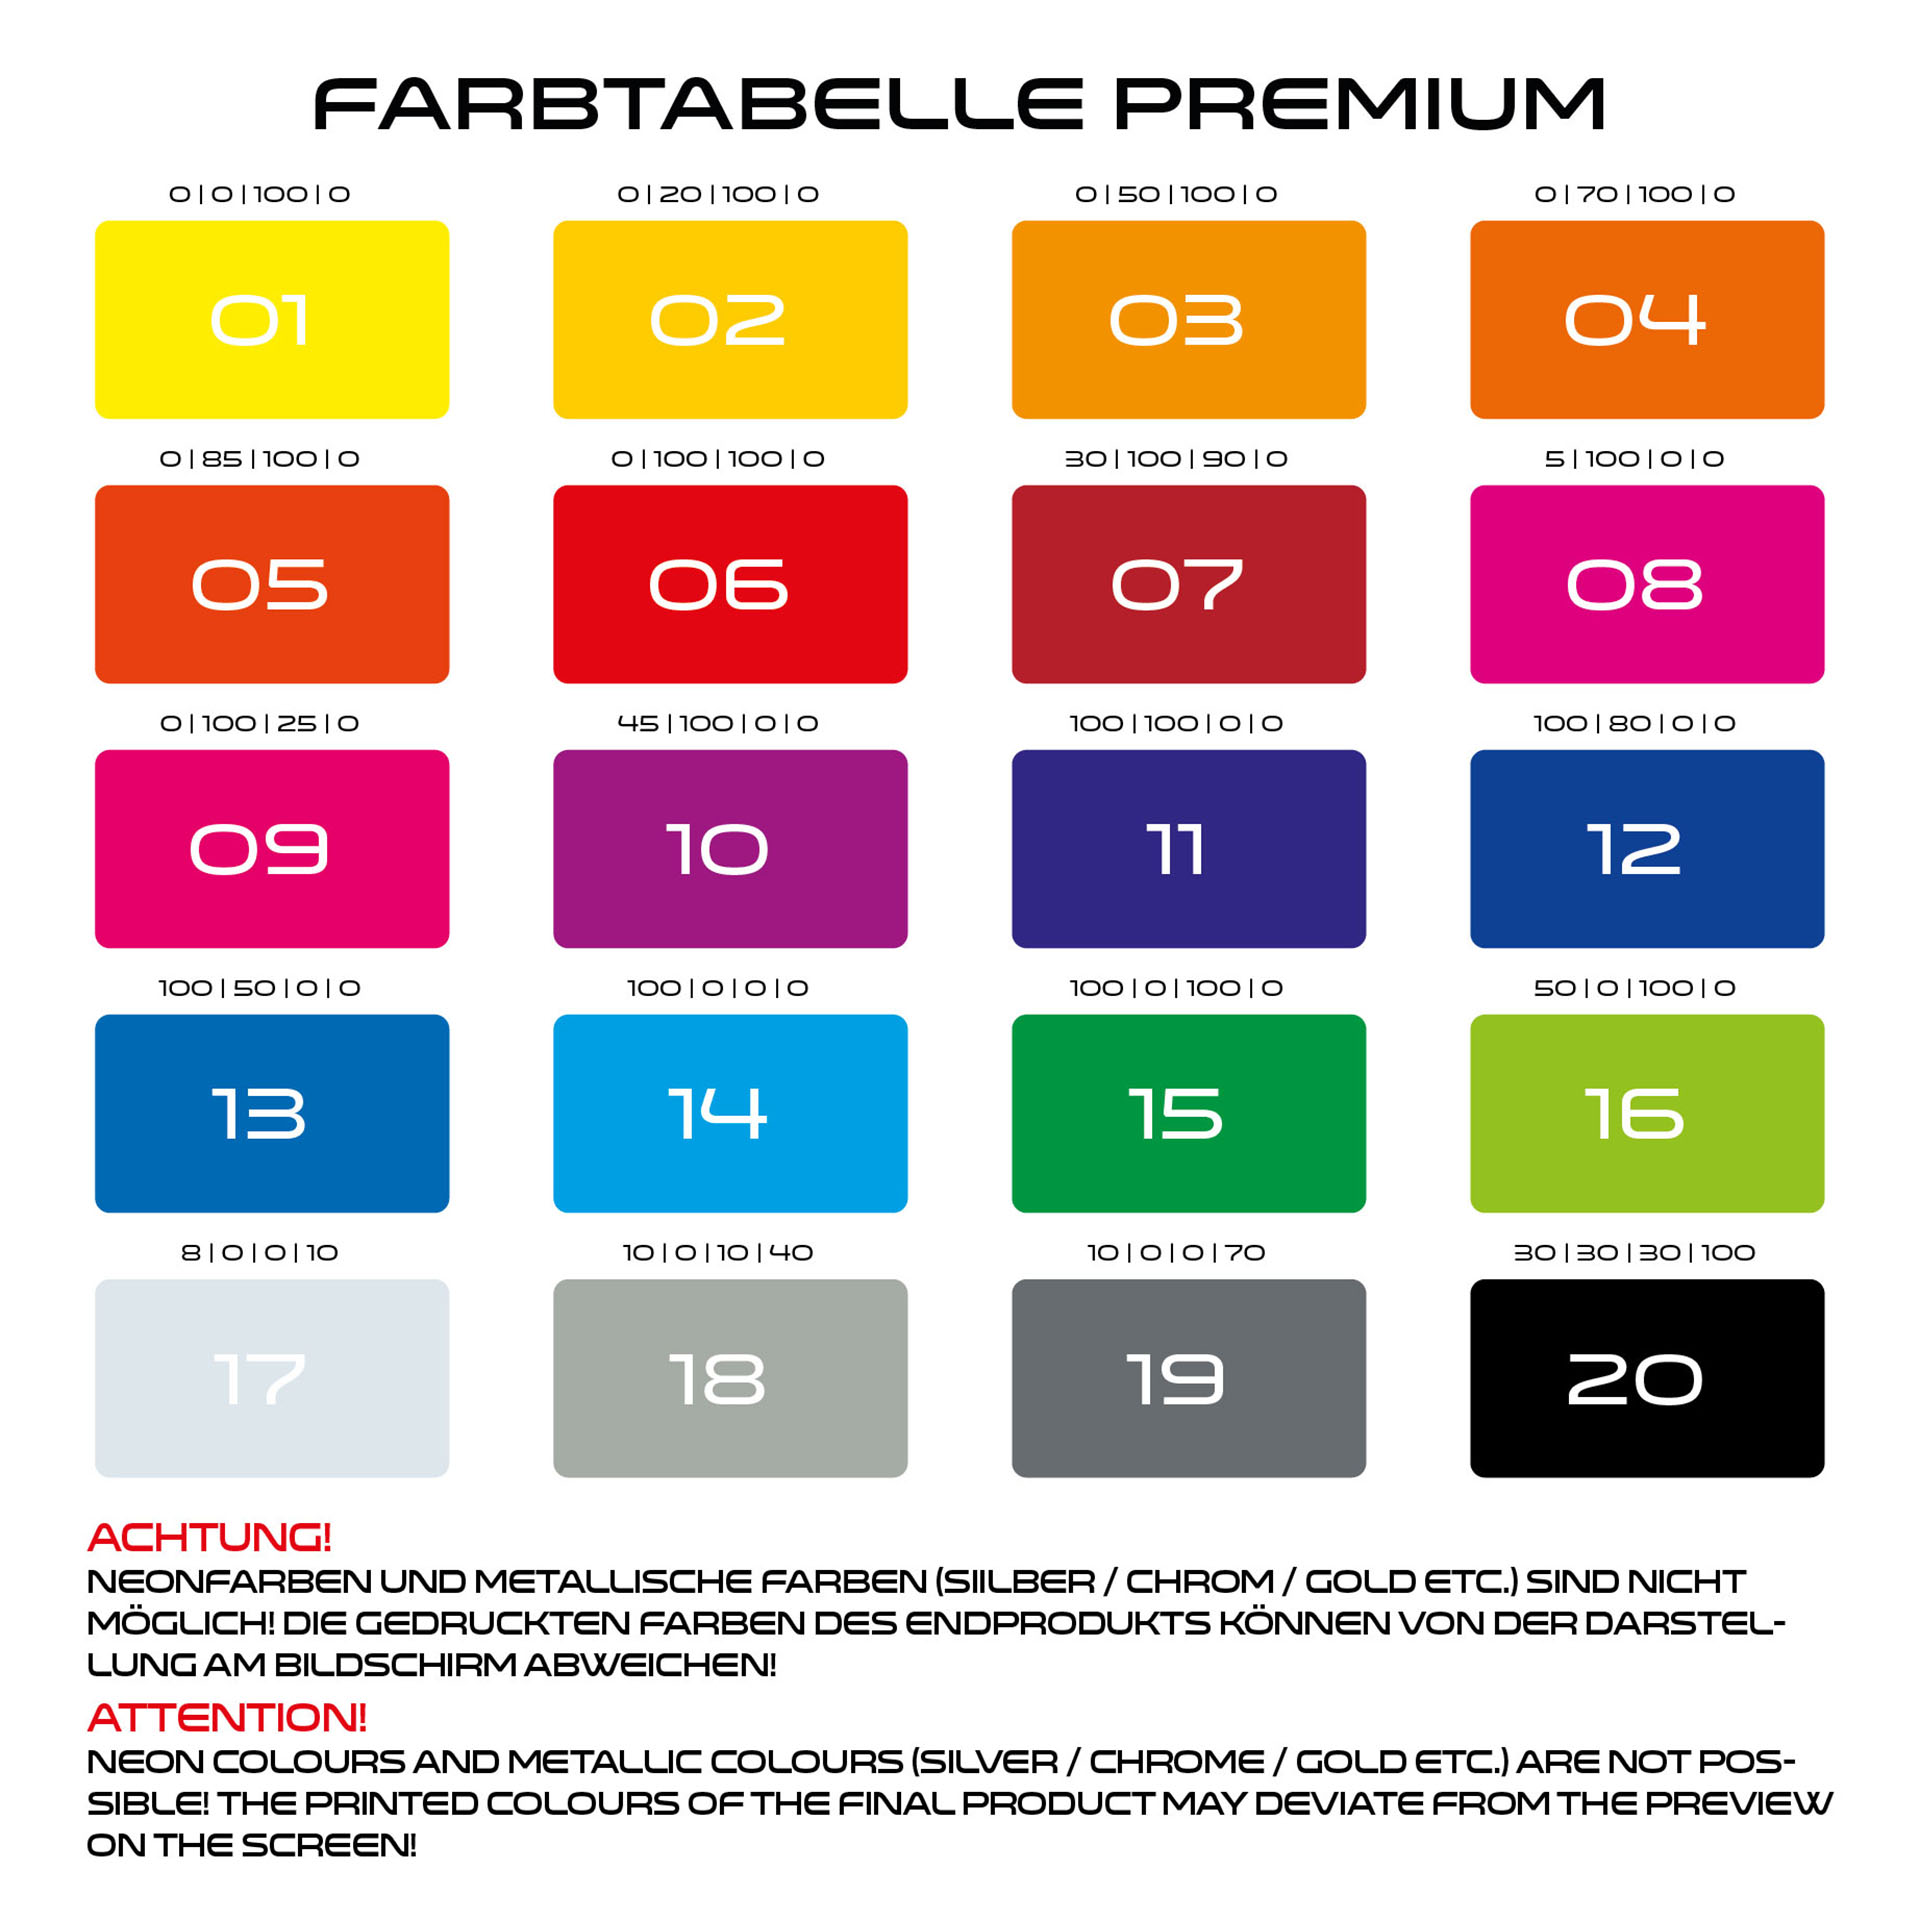 RACING V3 Felgenaufkleber Premium geteilt Farbtabelle Premium Wheelsticker